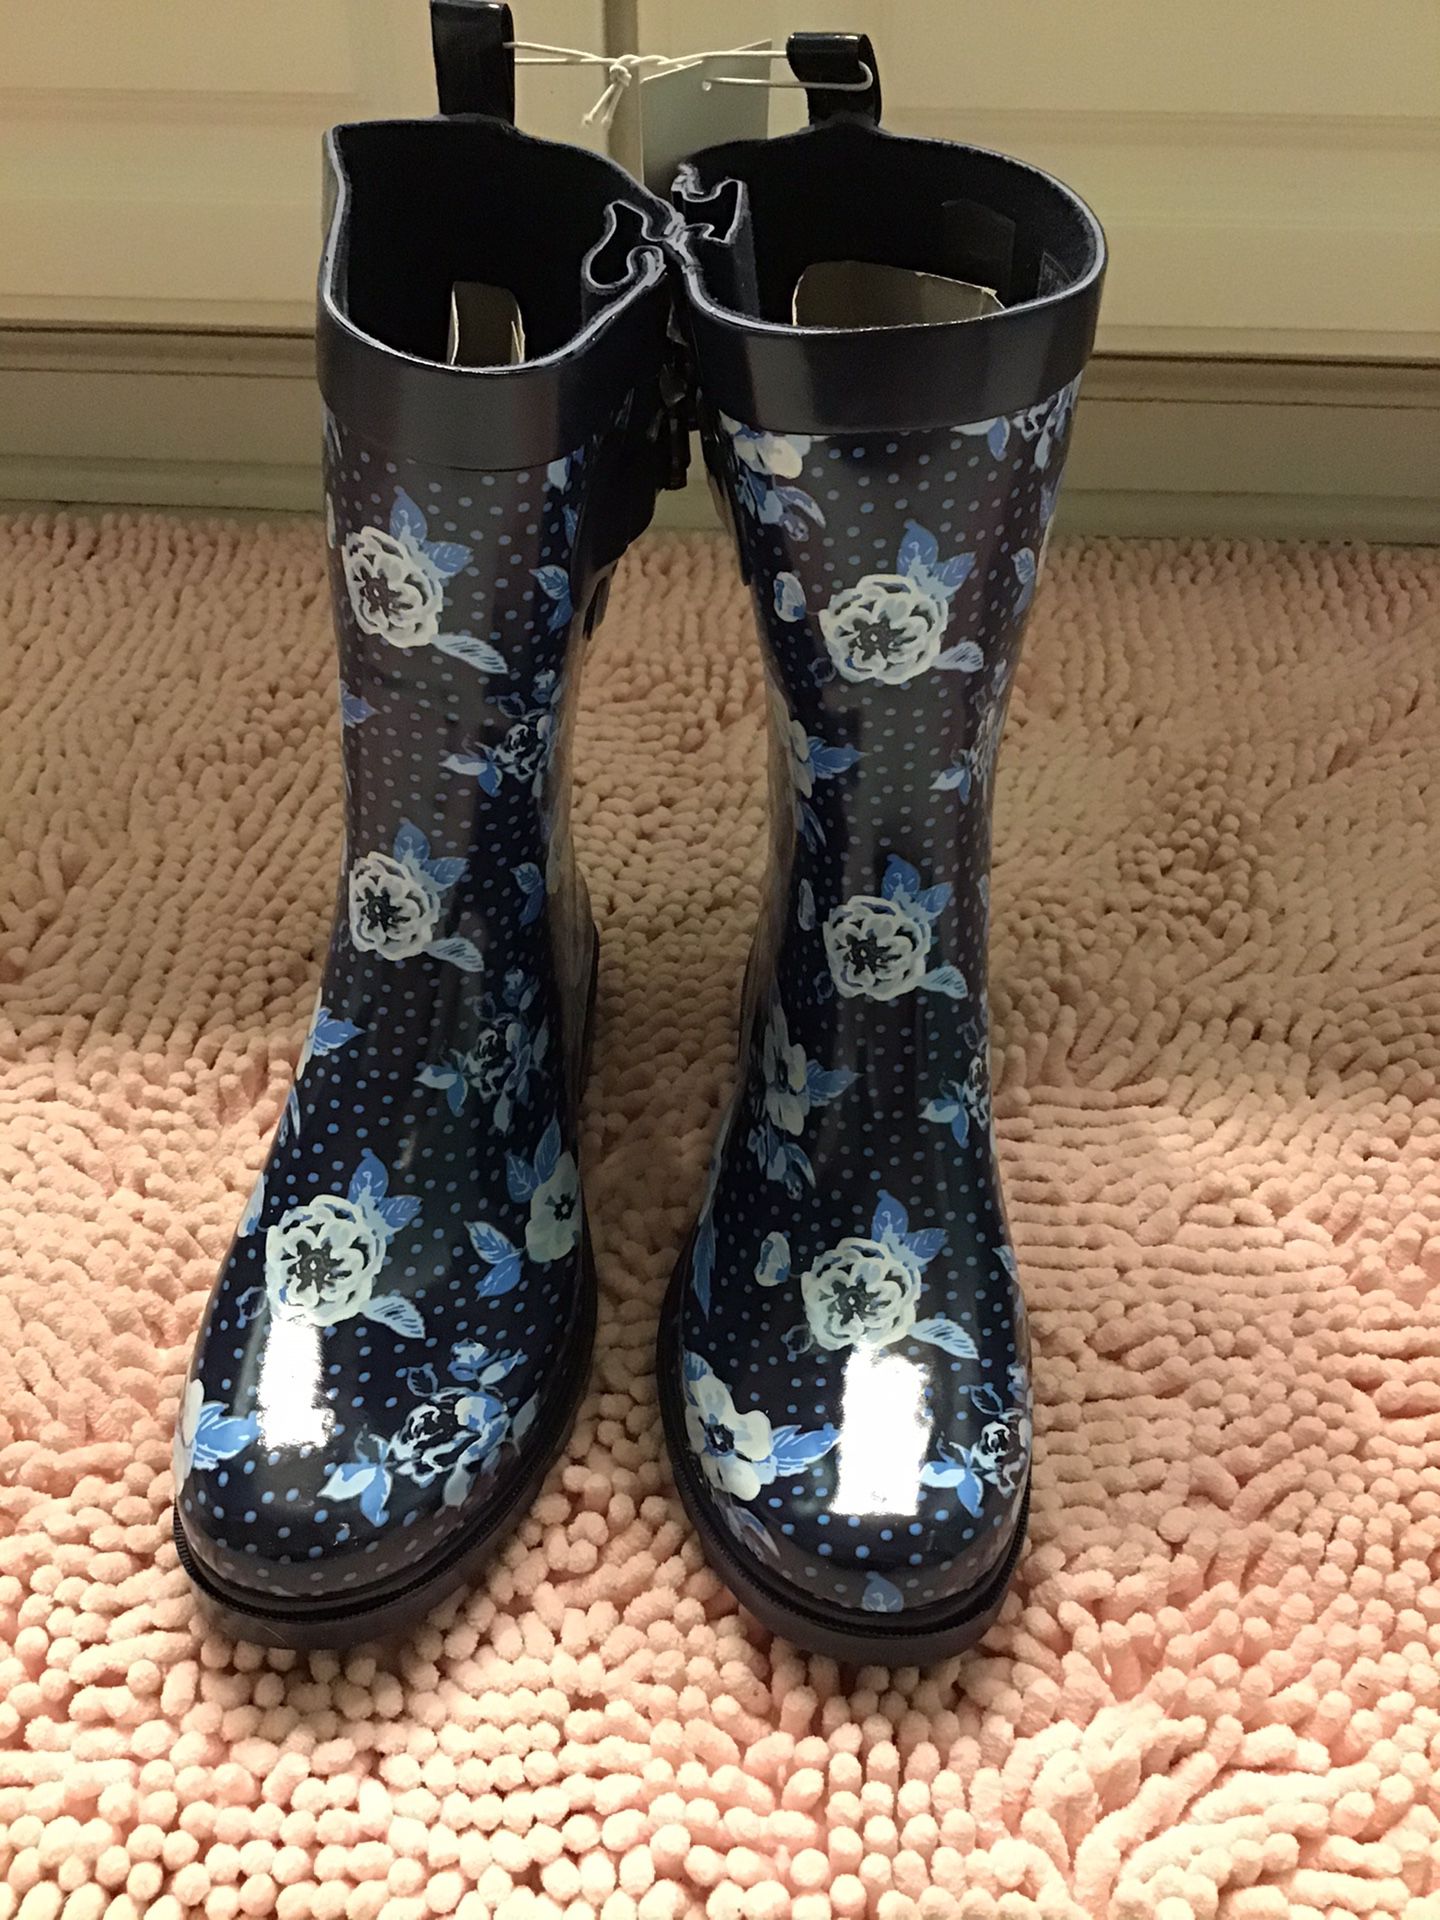 Brand new rain boots